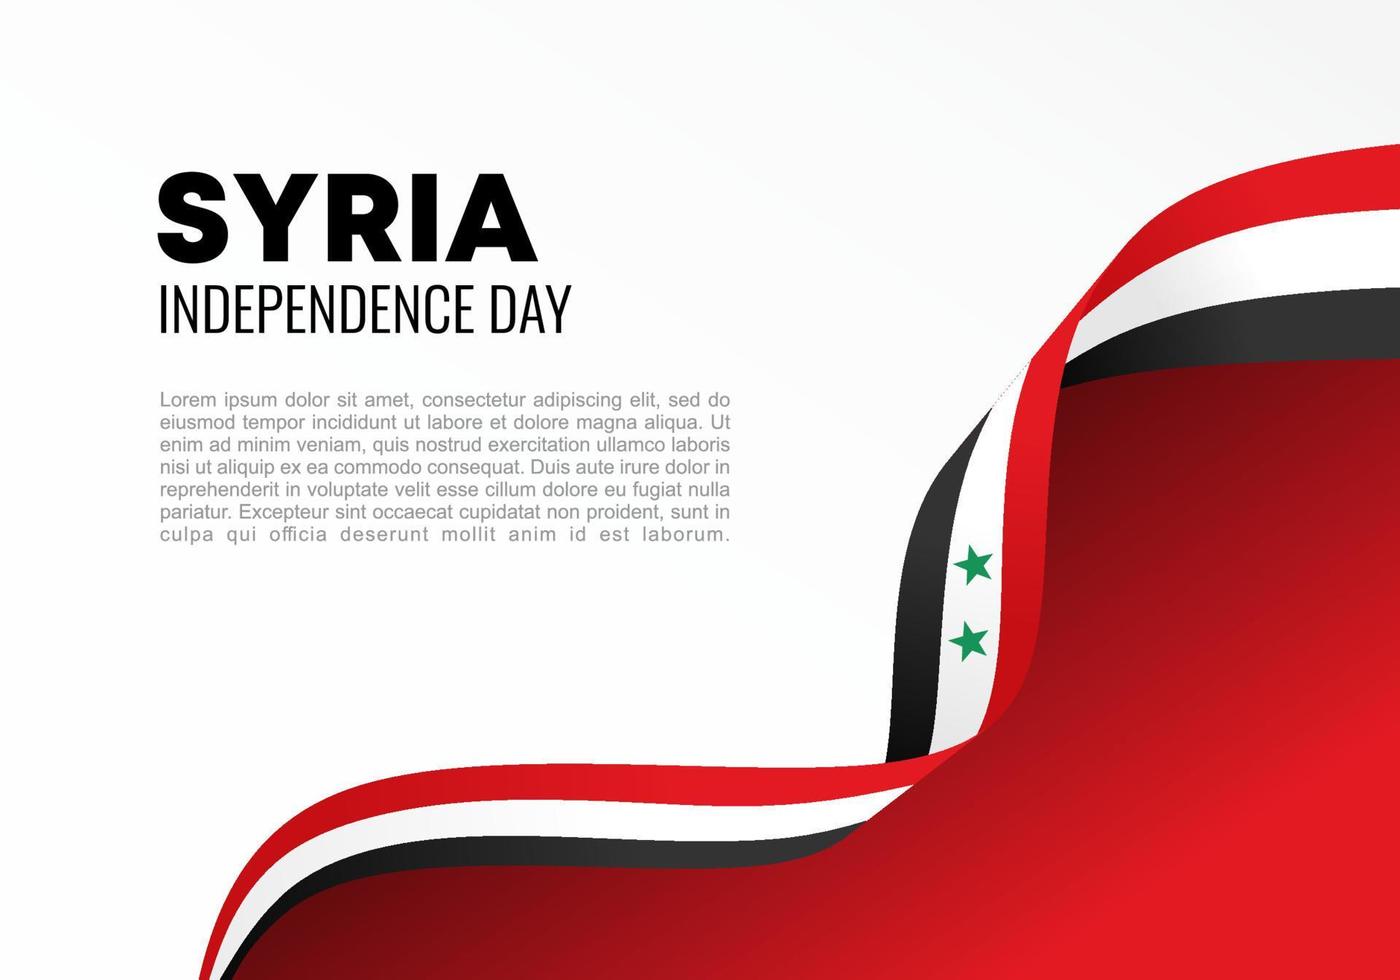 Syria independence day background for national celebration on April 11 vector